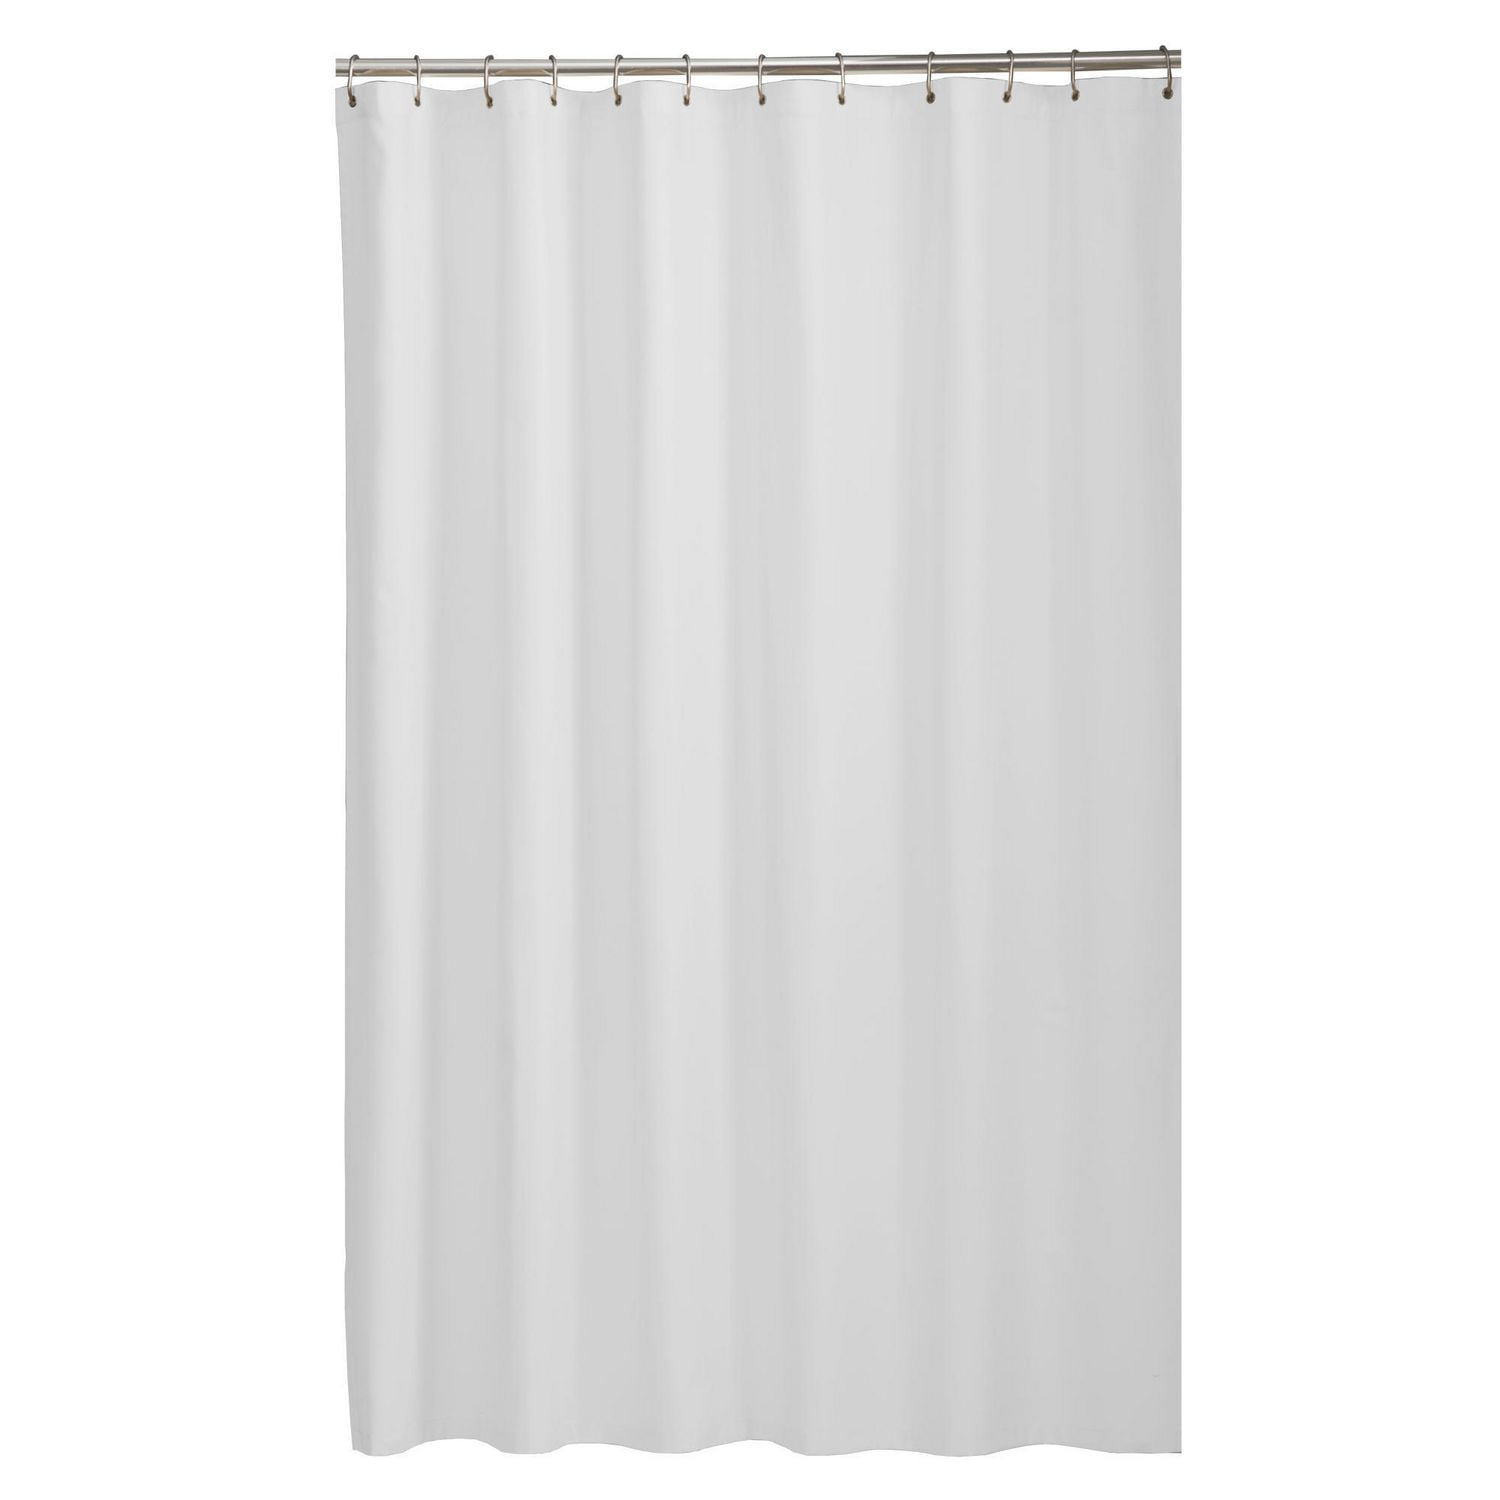 Mainstays Terazzo Shower Curtain, 72X72, Printed Geometric Microfiber,  Unlined